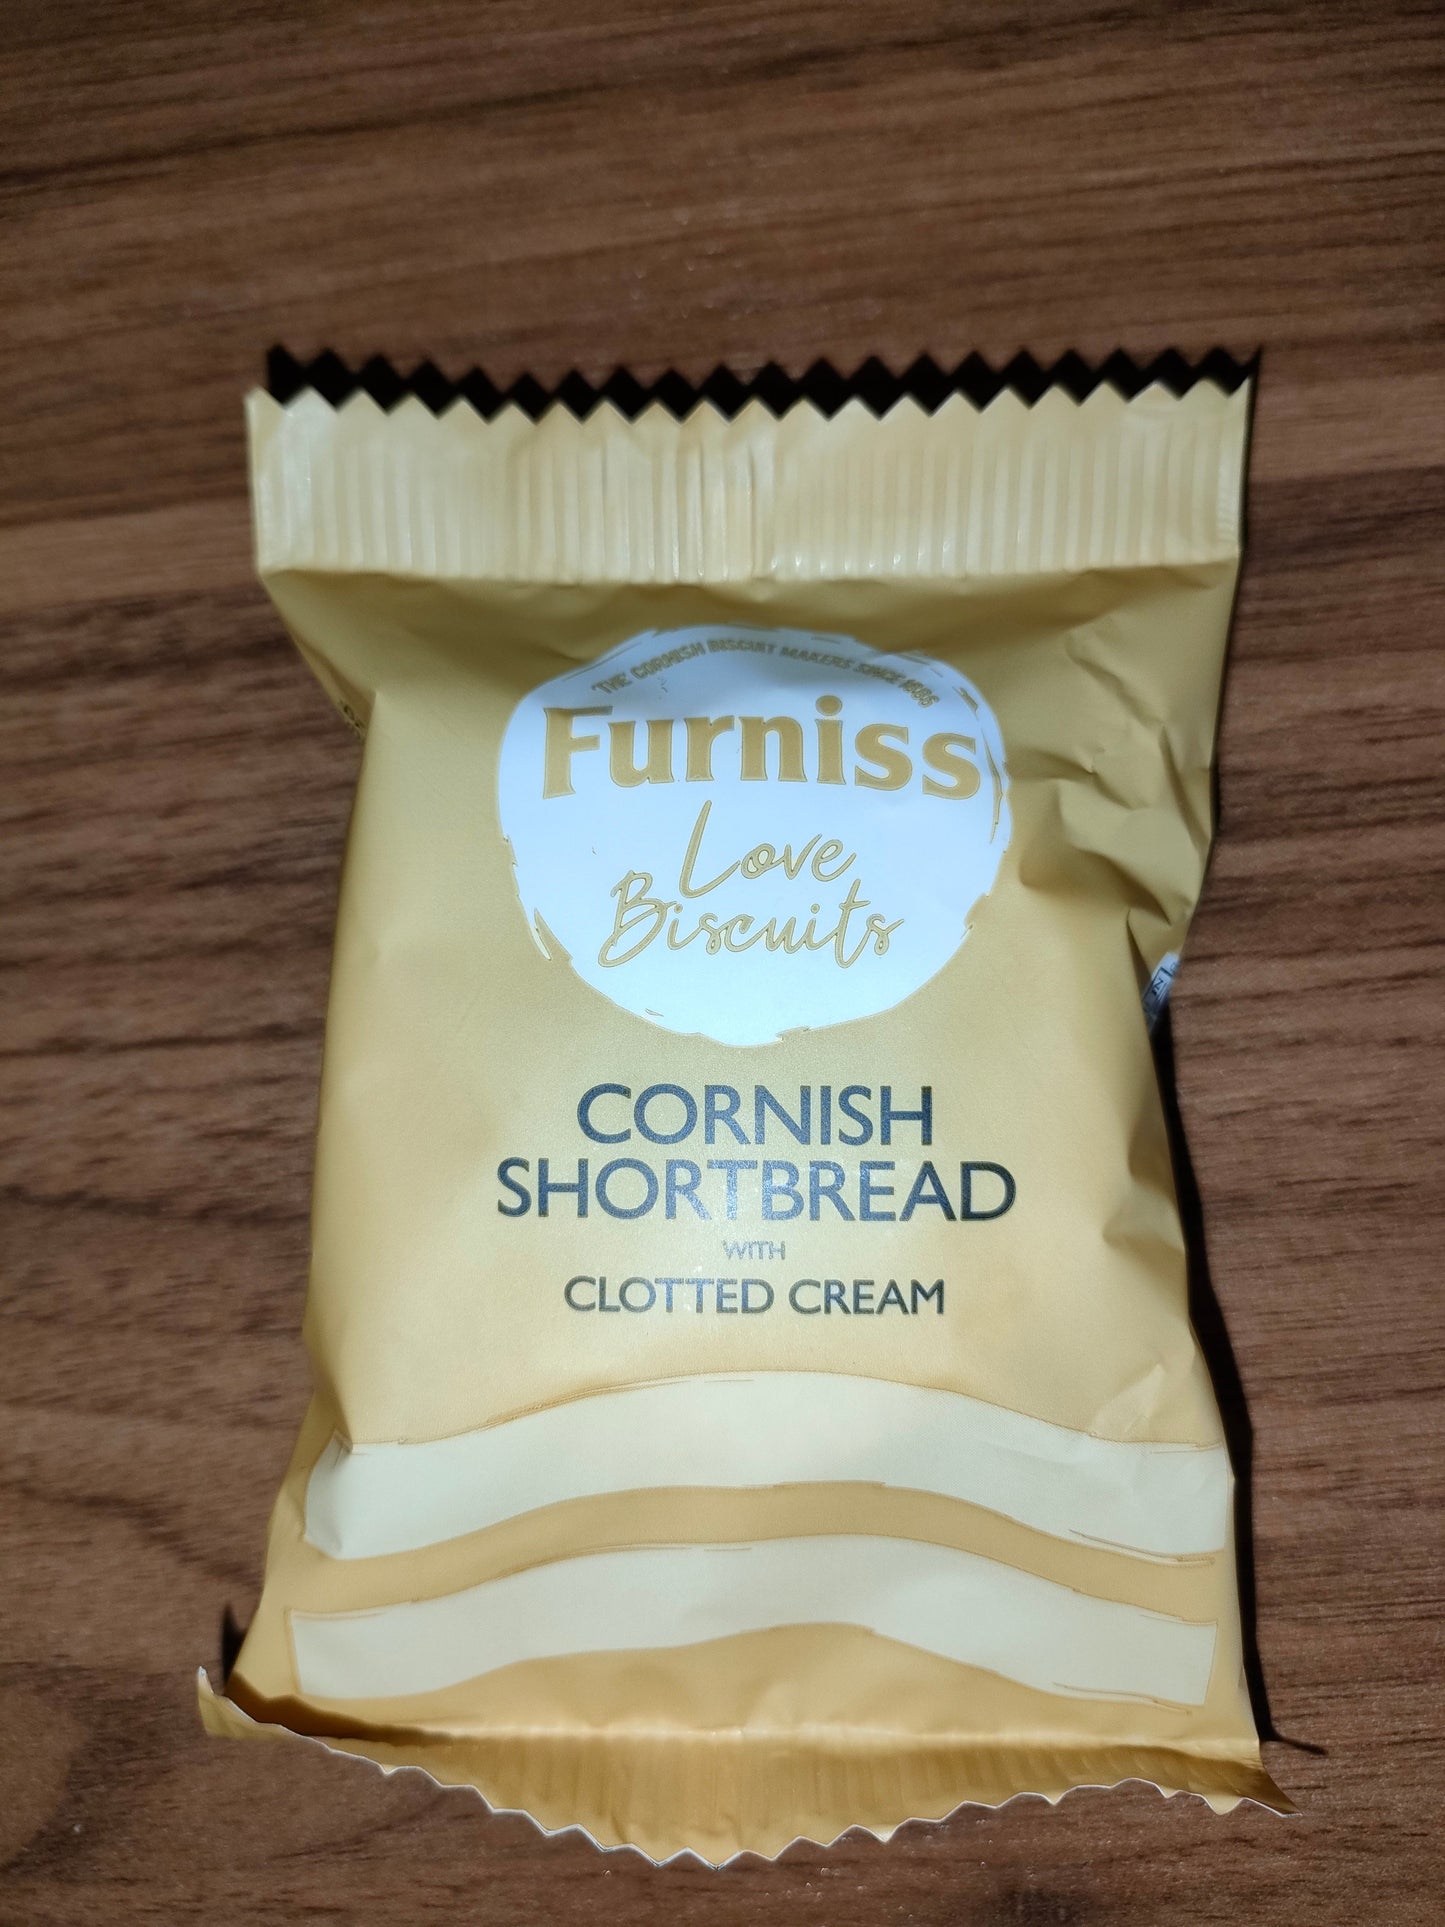 Furniss Cornish shortbread with clotted cream twin pack - The Cornish Scone Company